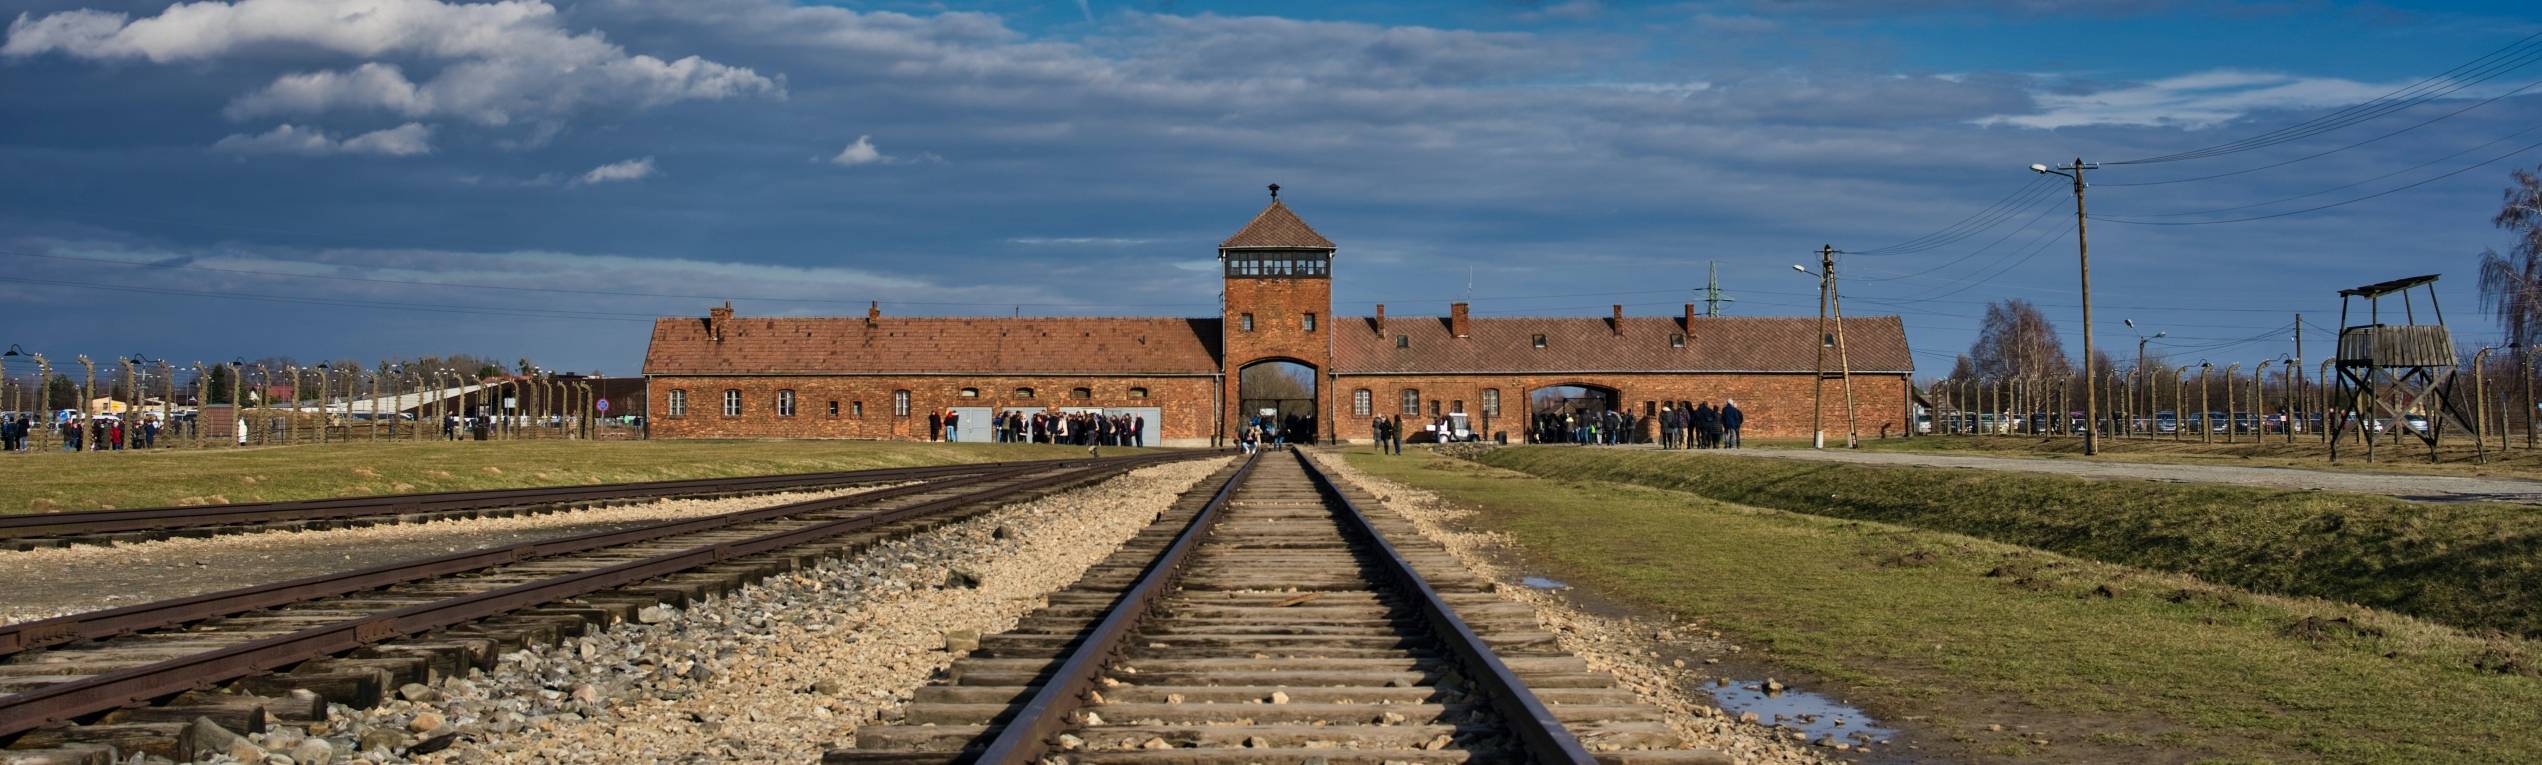 Minnesmerket Auschwitz - Birkenau